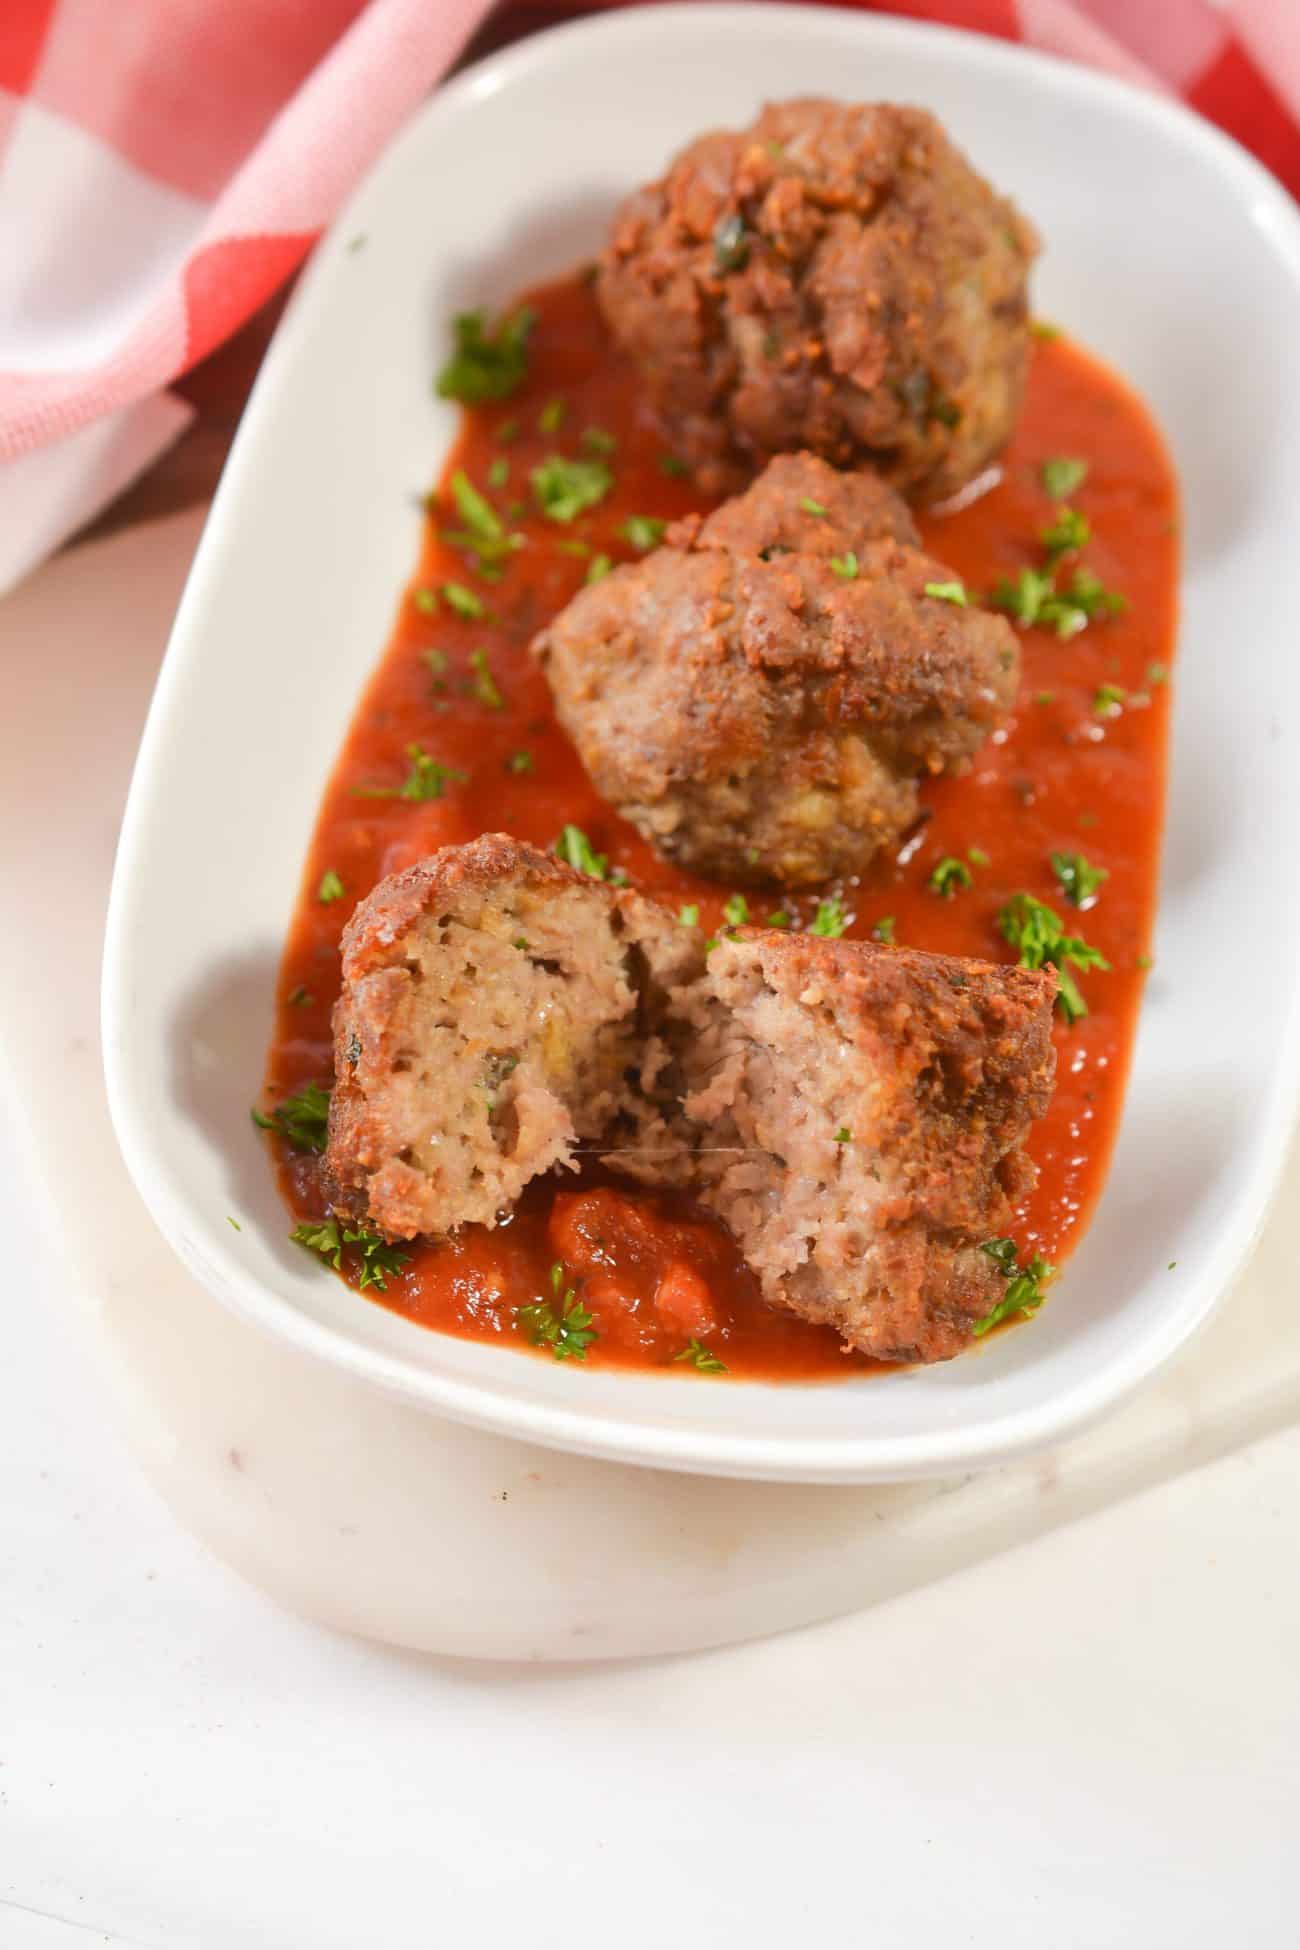 Grandma’s Italian Meatballs